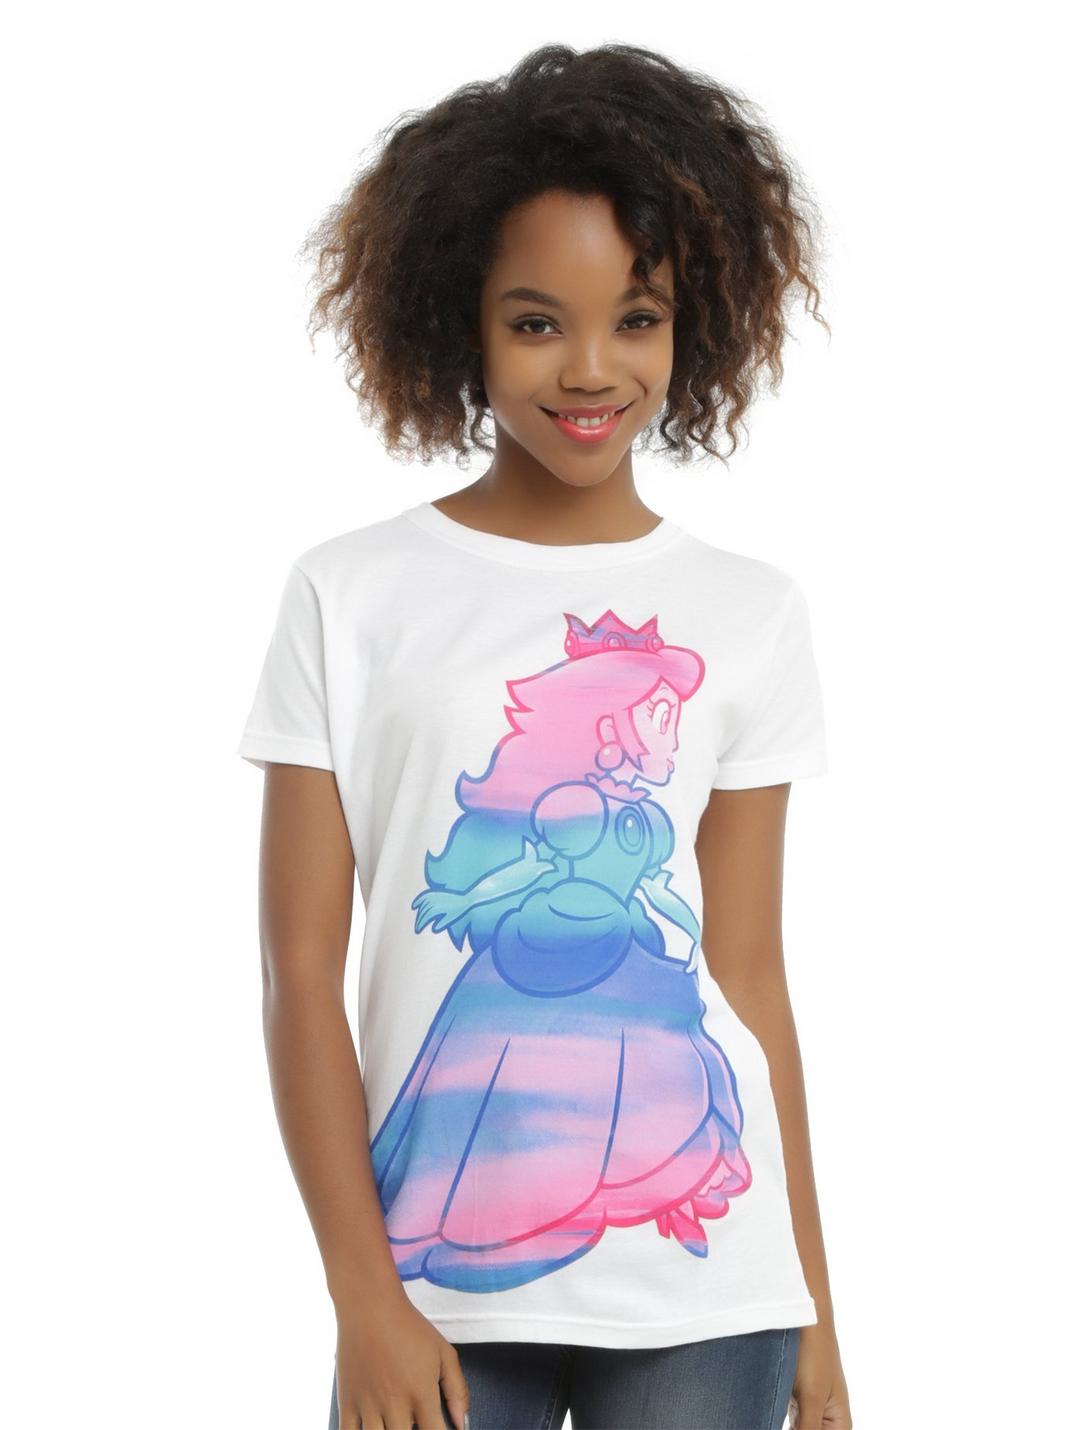 Super Mario Princess Peach Watercolor Girls T-Shirt | Hot Topic